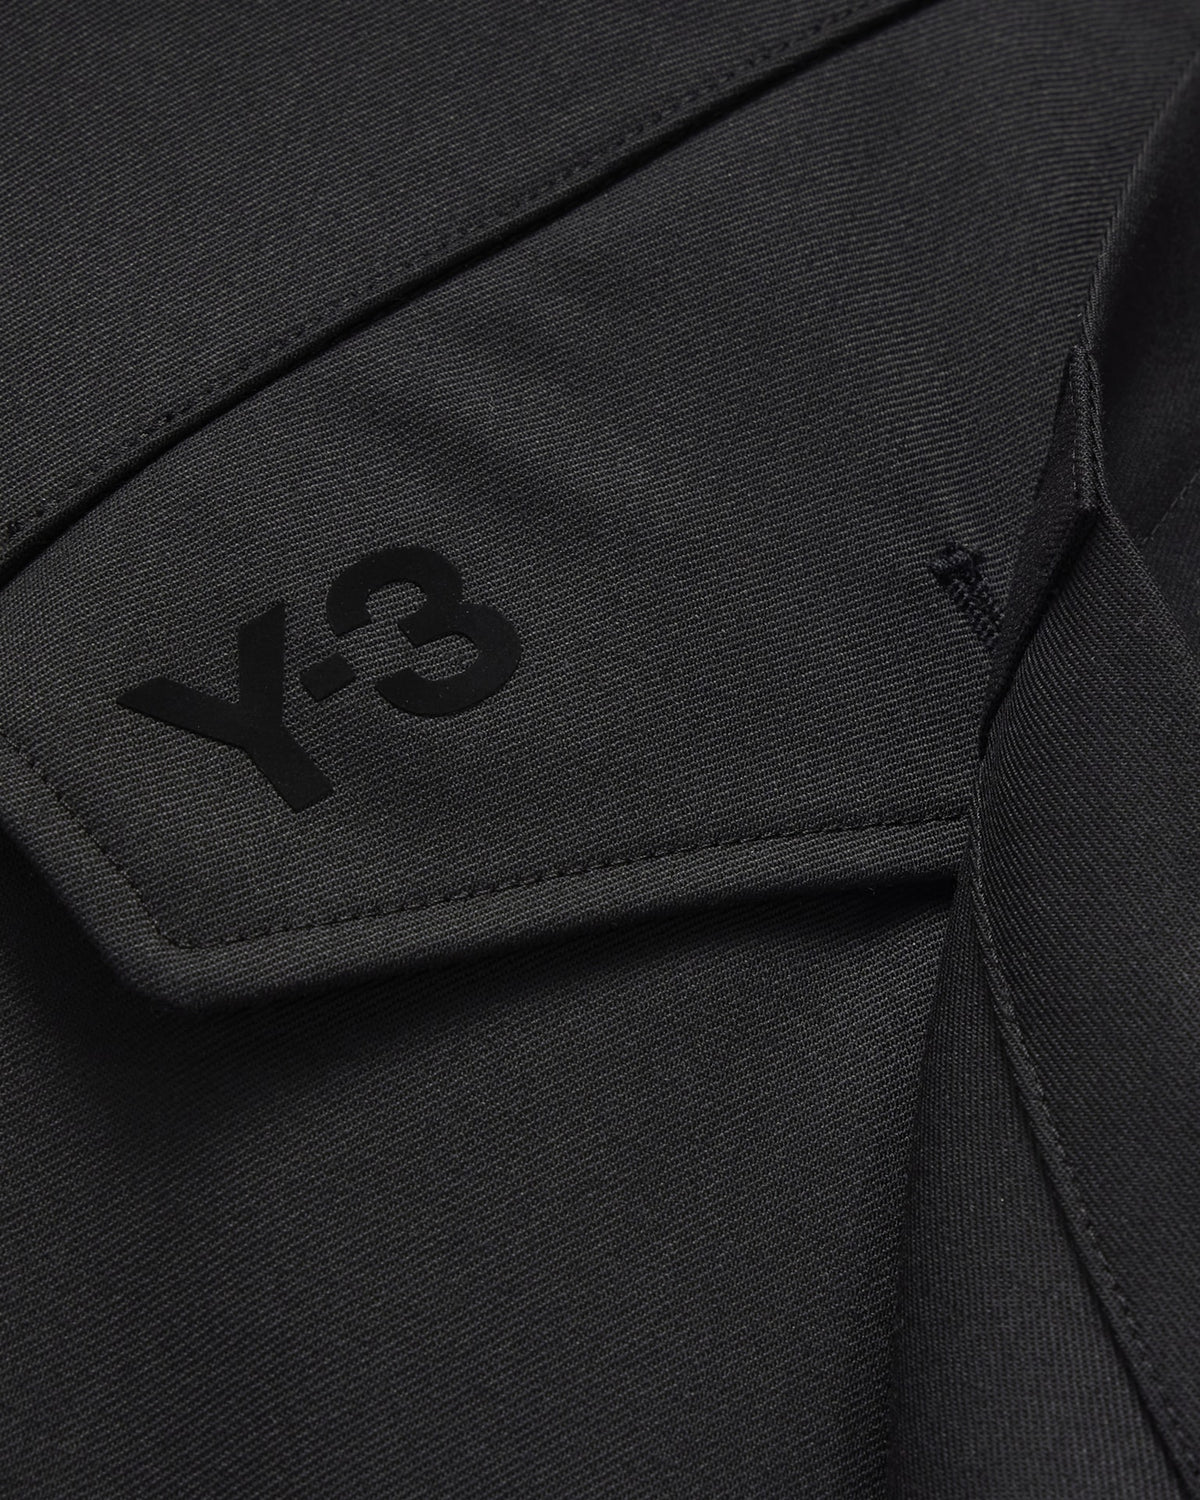 adidas Y-3 | W Refined Wool Skirt Black - IN4372 - Concrete